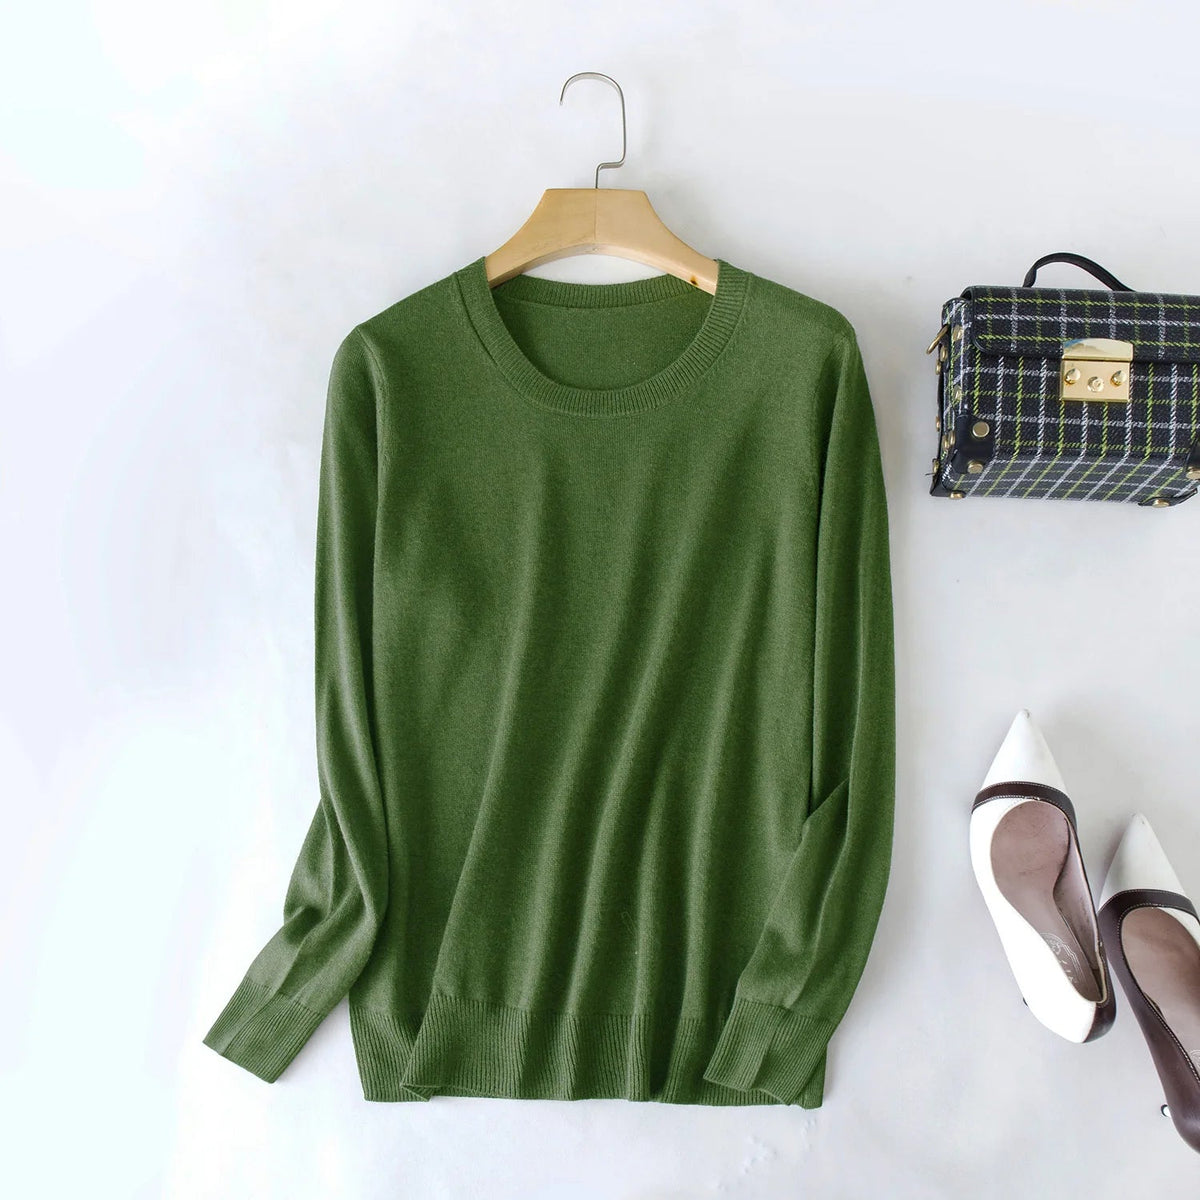 Golden Apple Silk Cashmere Sweater | Hypoallergenic - Allergy Friendly - Naturally Free